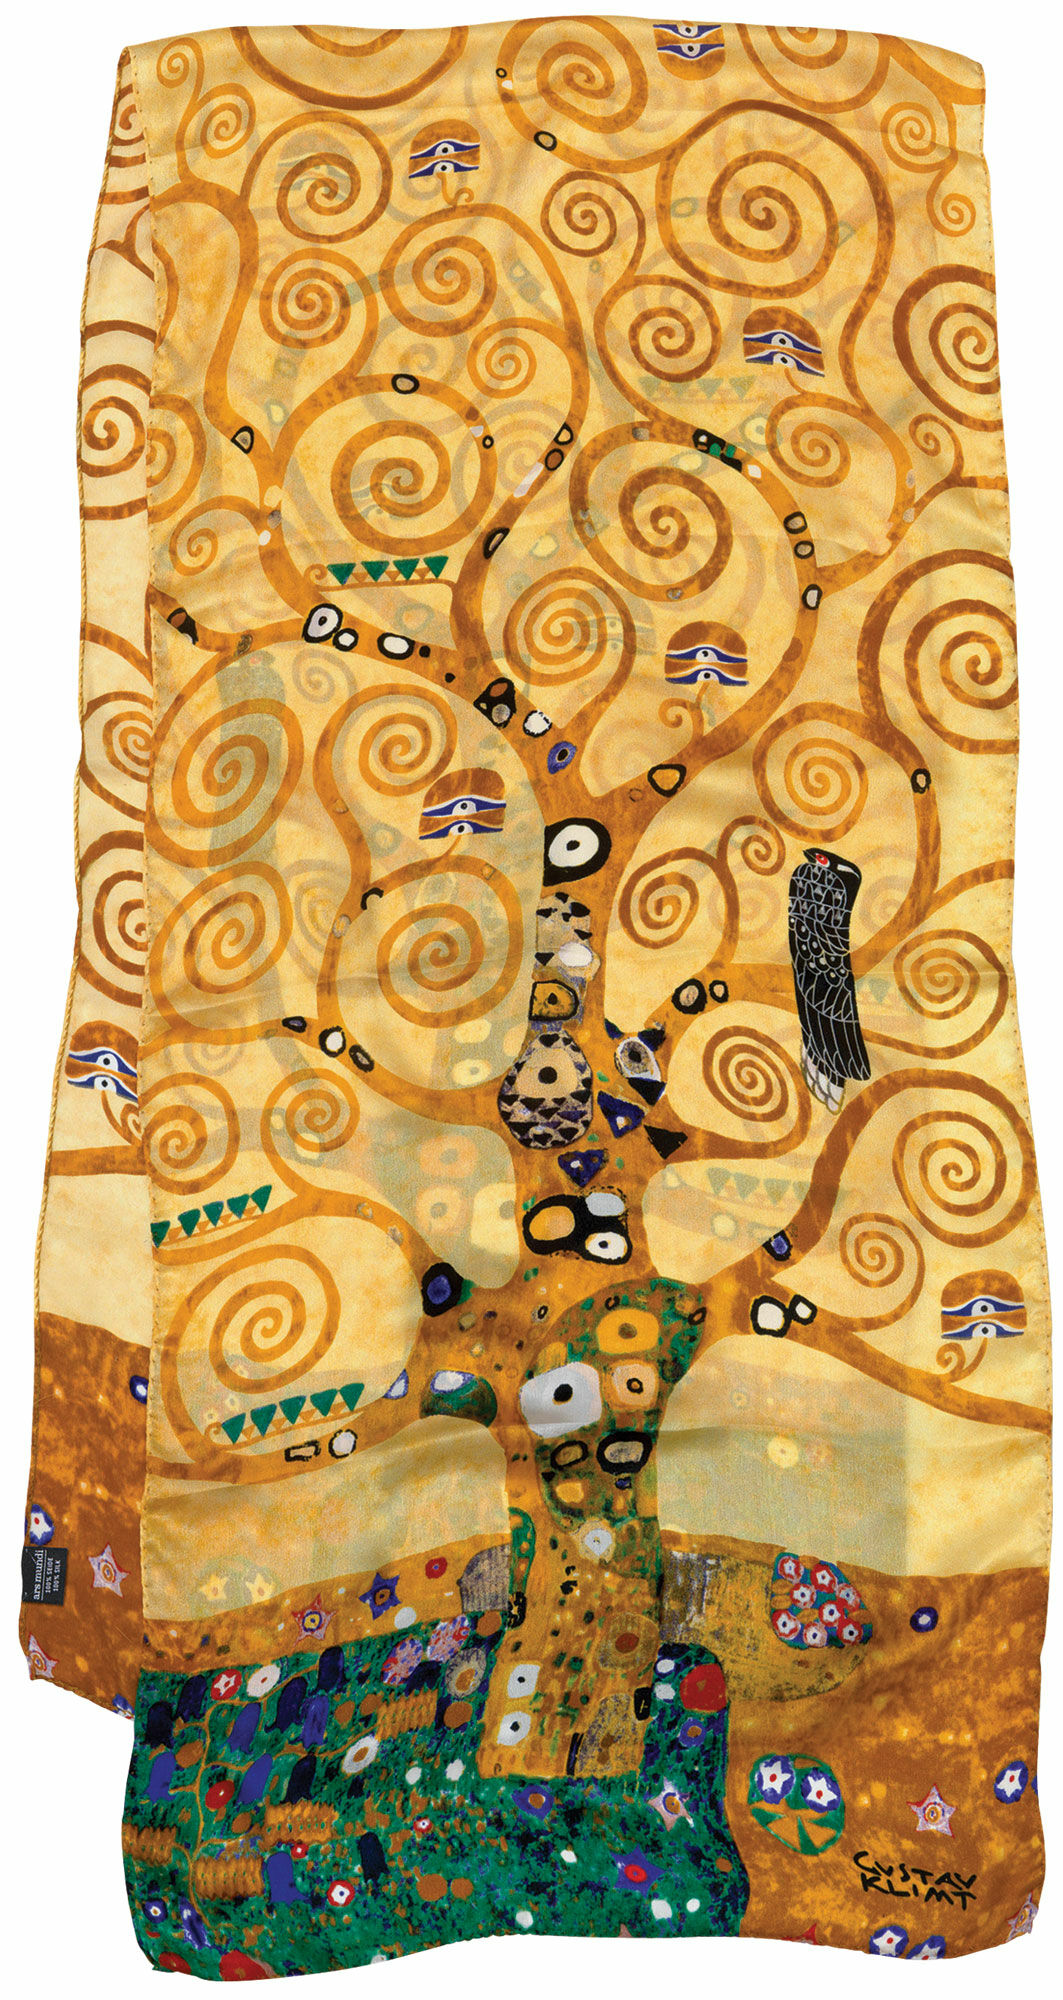 Silk scarf "Tree of Life" by Gustav Klimt